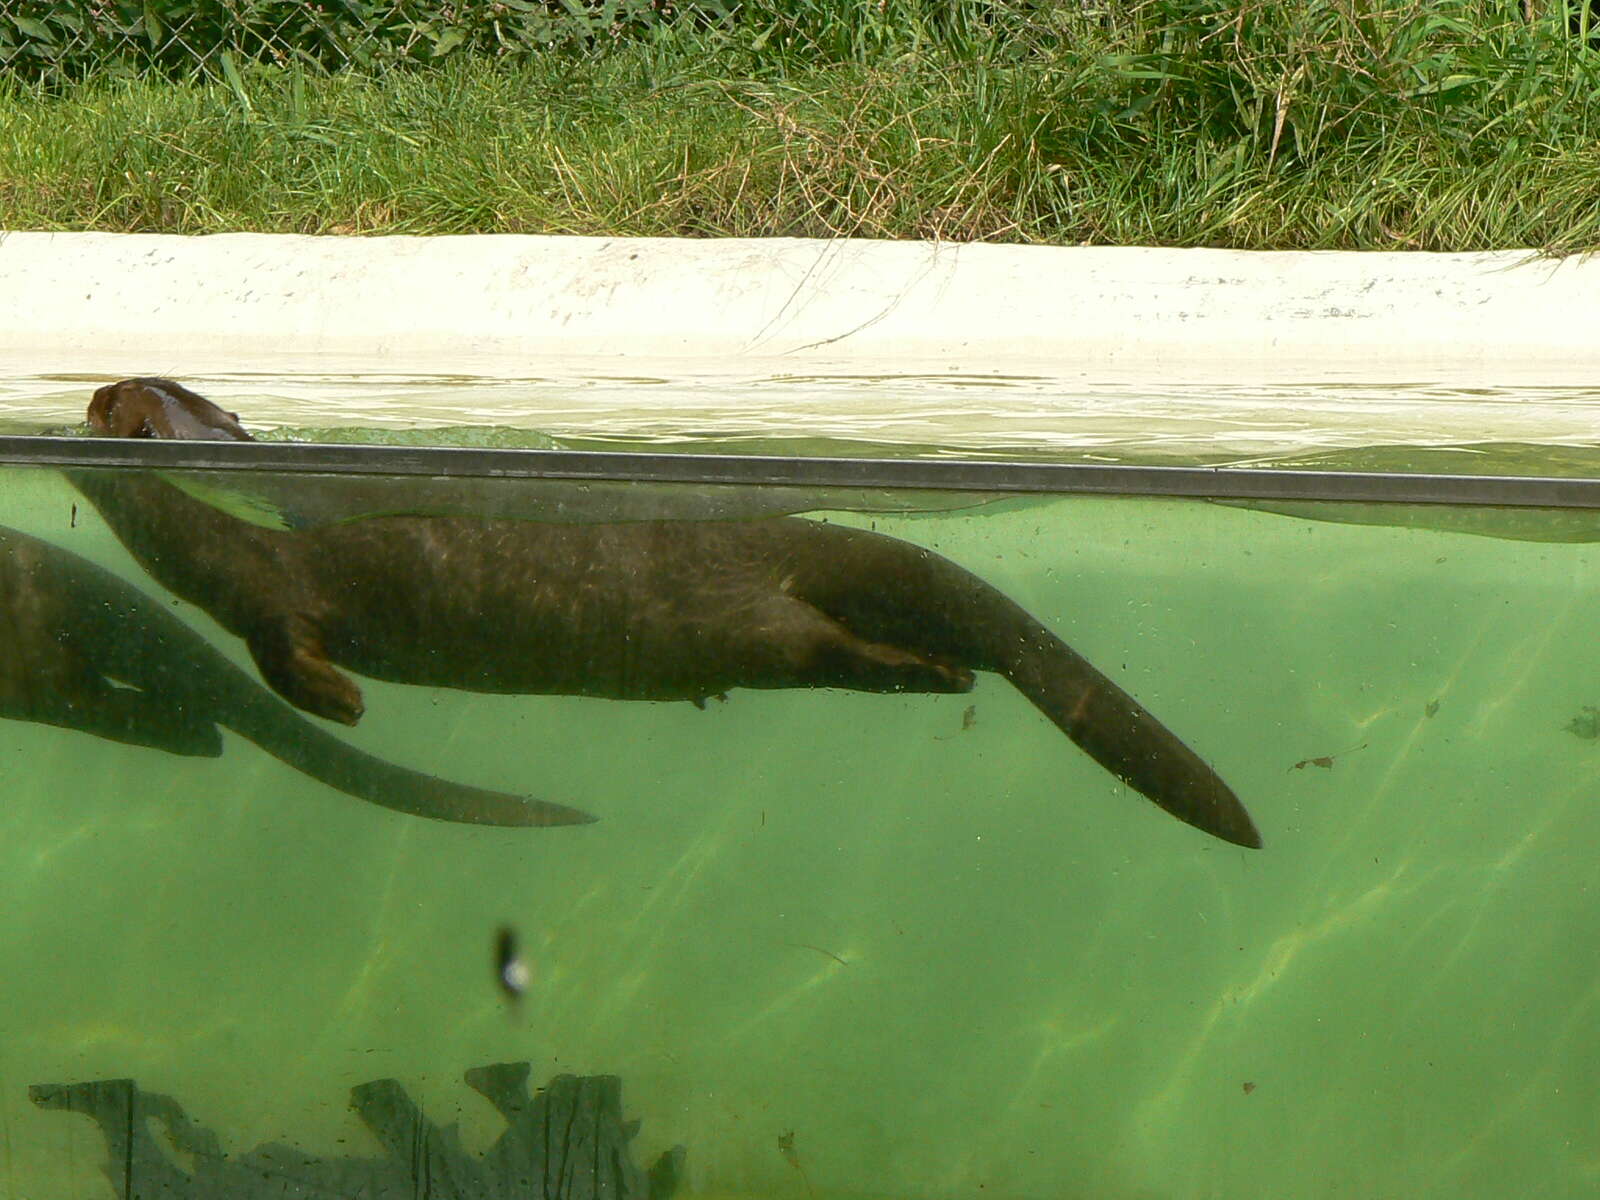 Image of giant otter